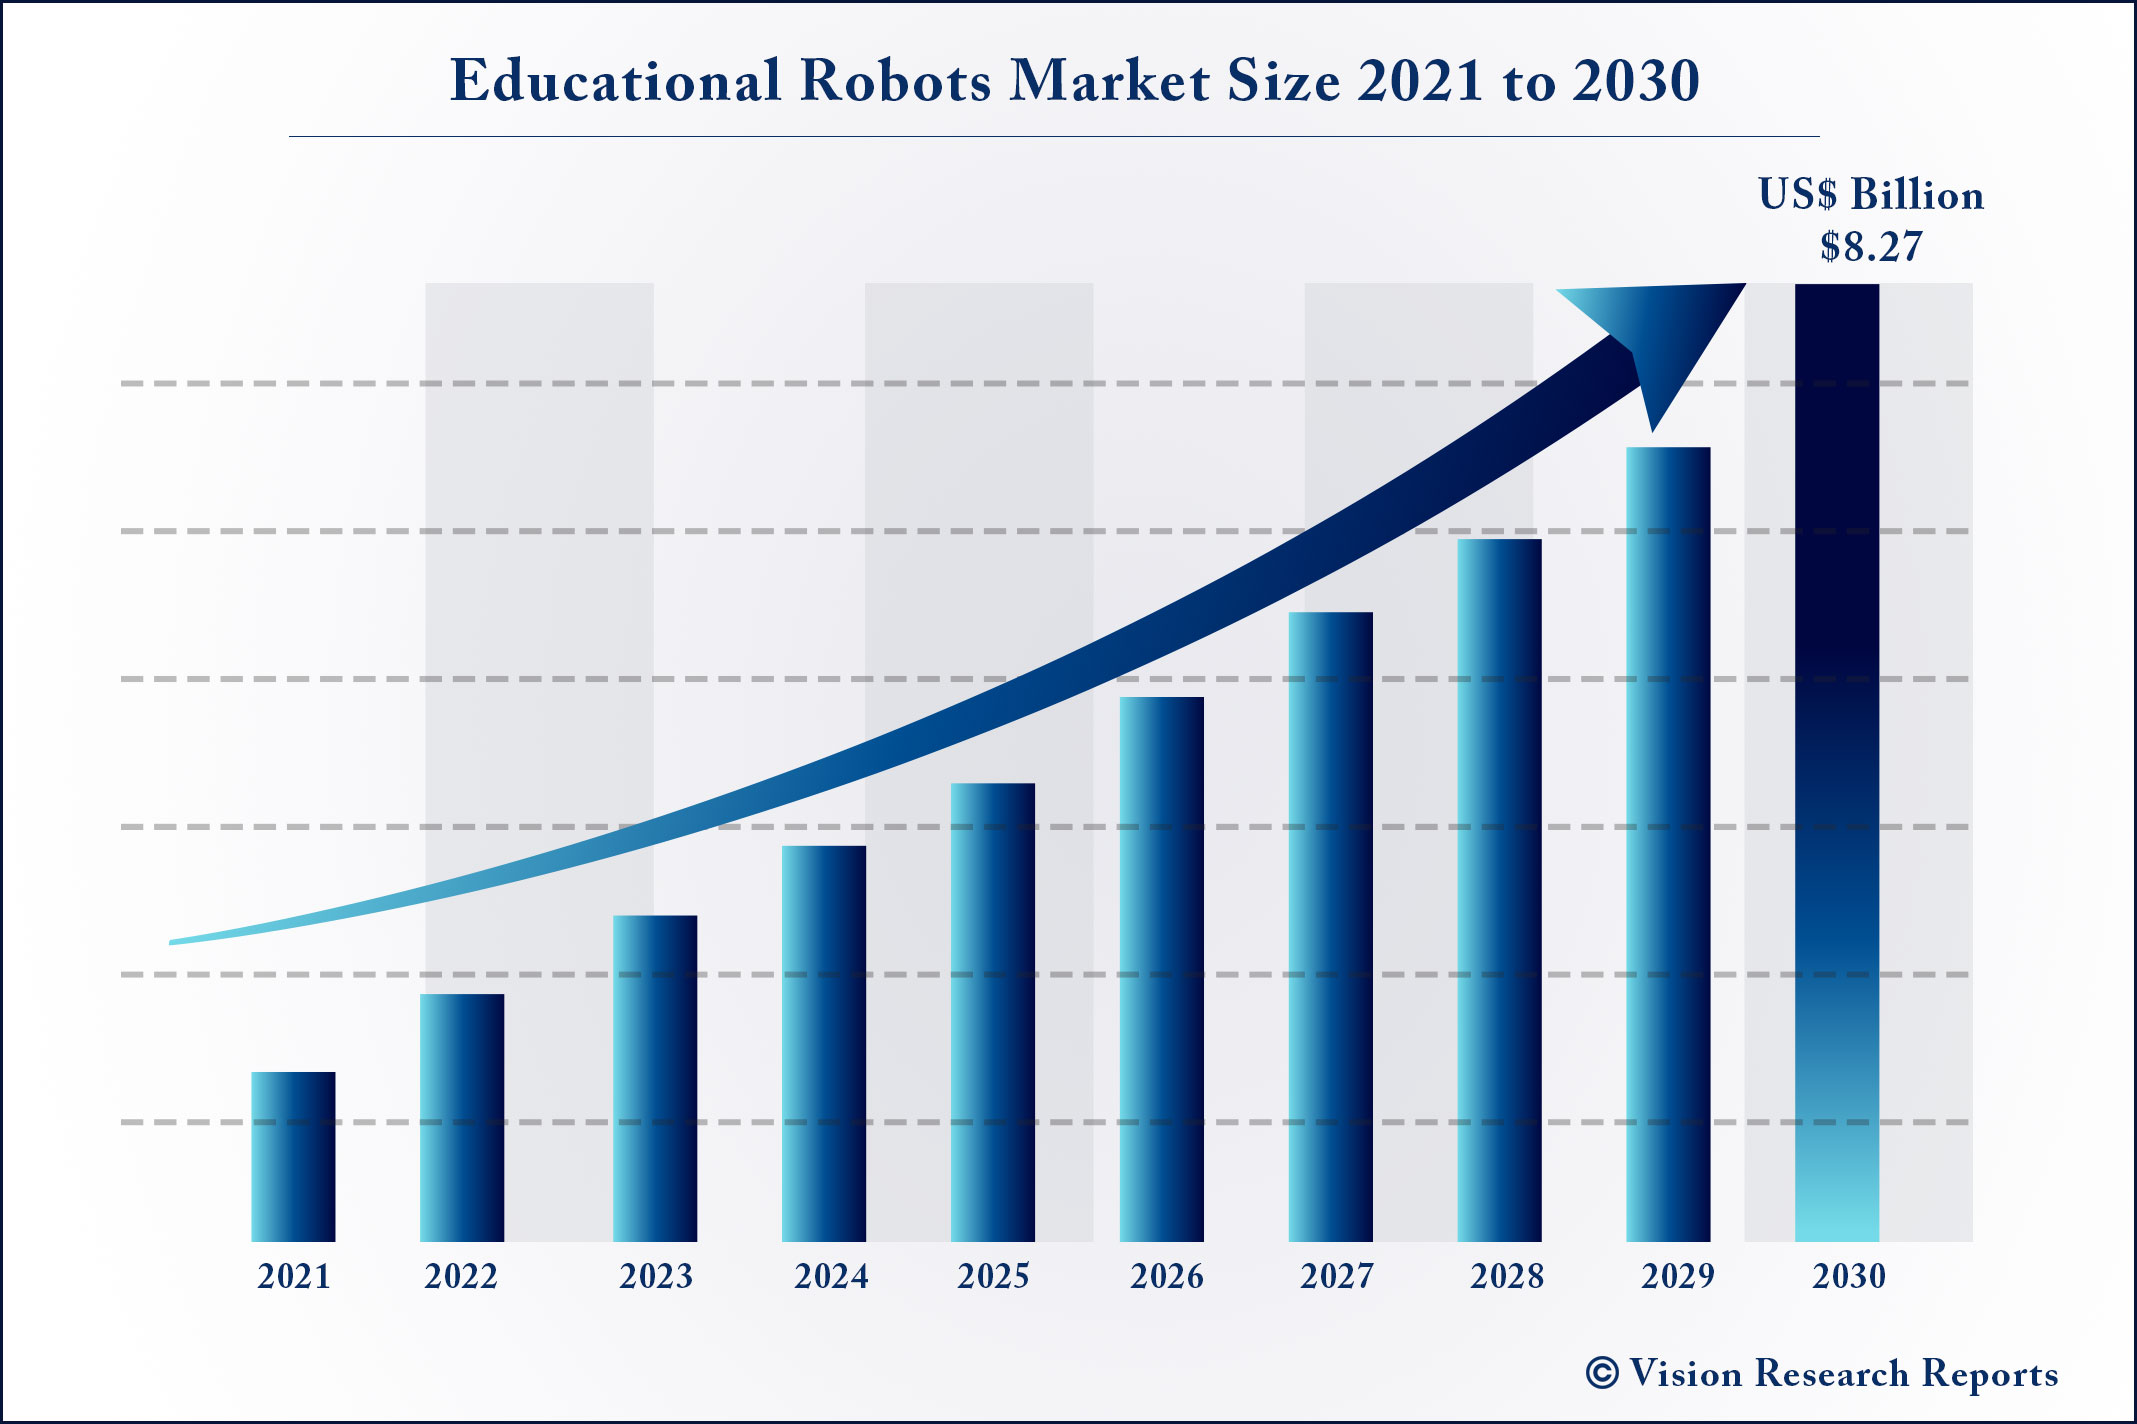 Educational Robots Market Size 2021 to 2030